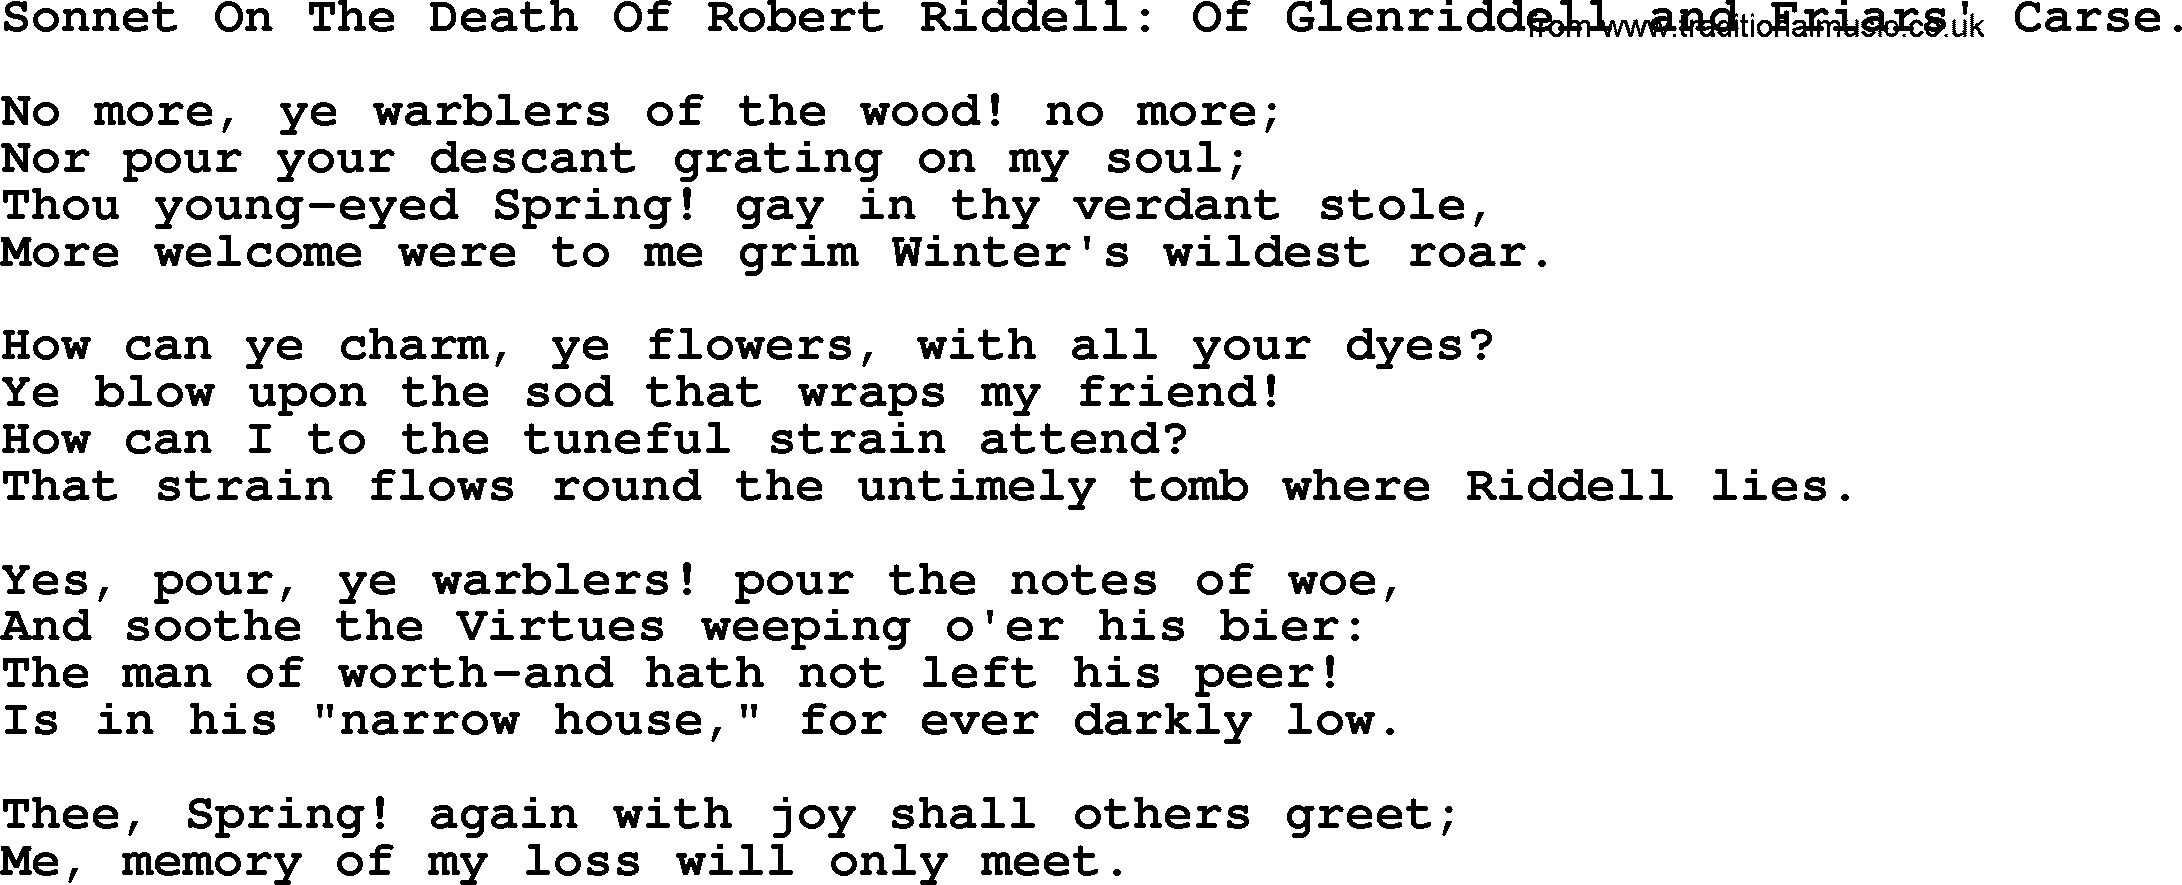 Robert Burns Songs & Lyrics: Sonnet On The Death Of Robert Riddell Of Glenriddell And Friars' Carse.